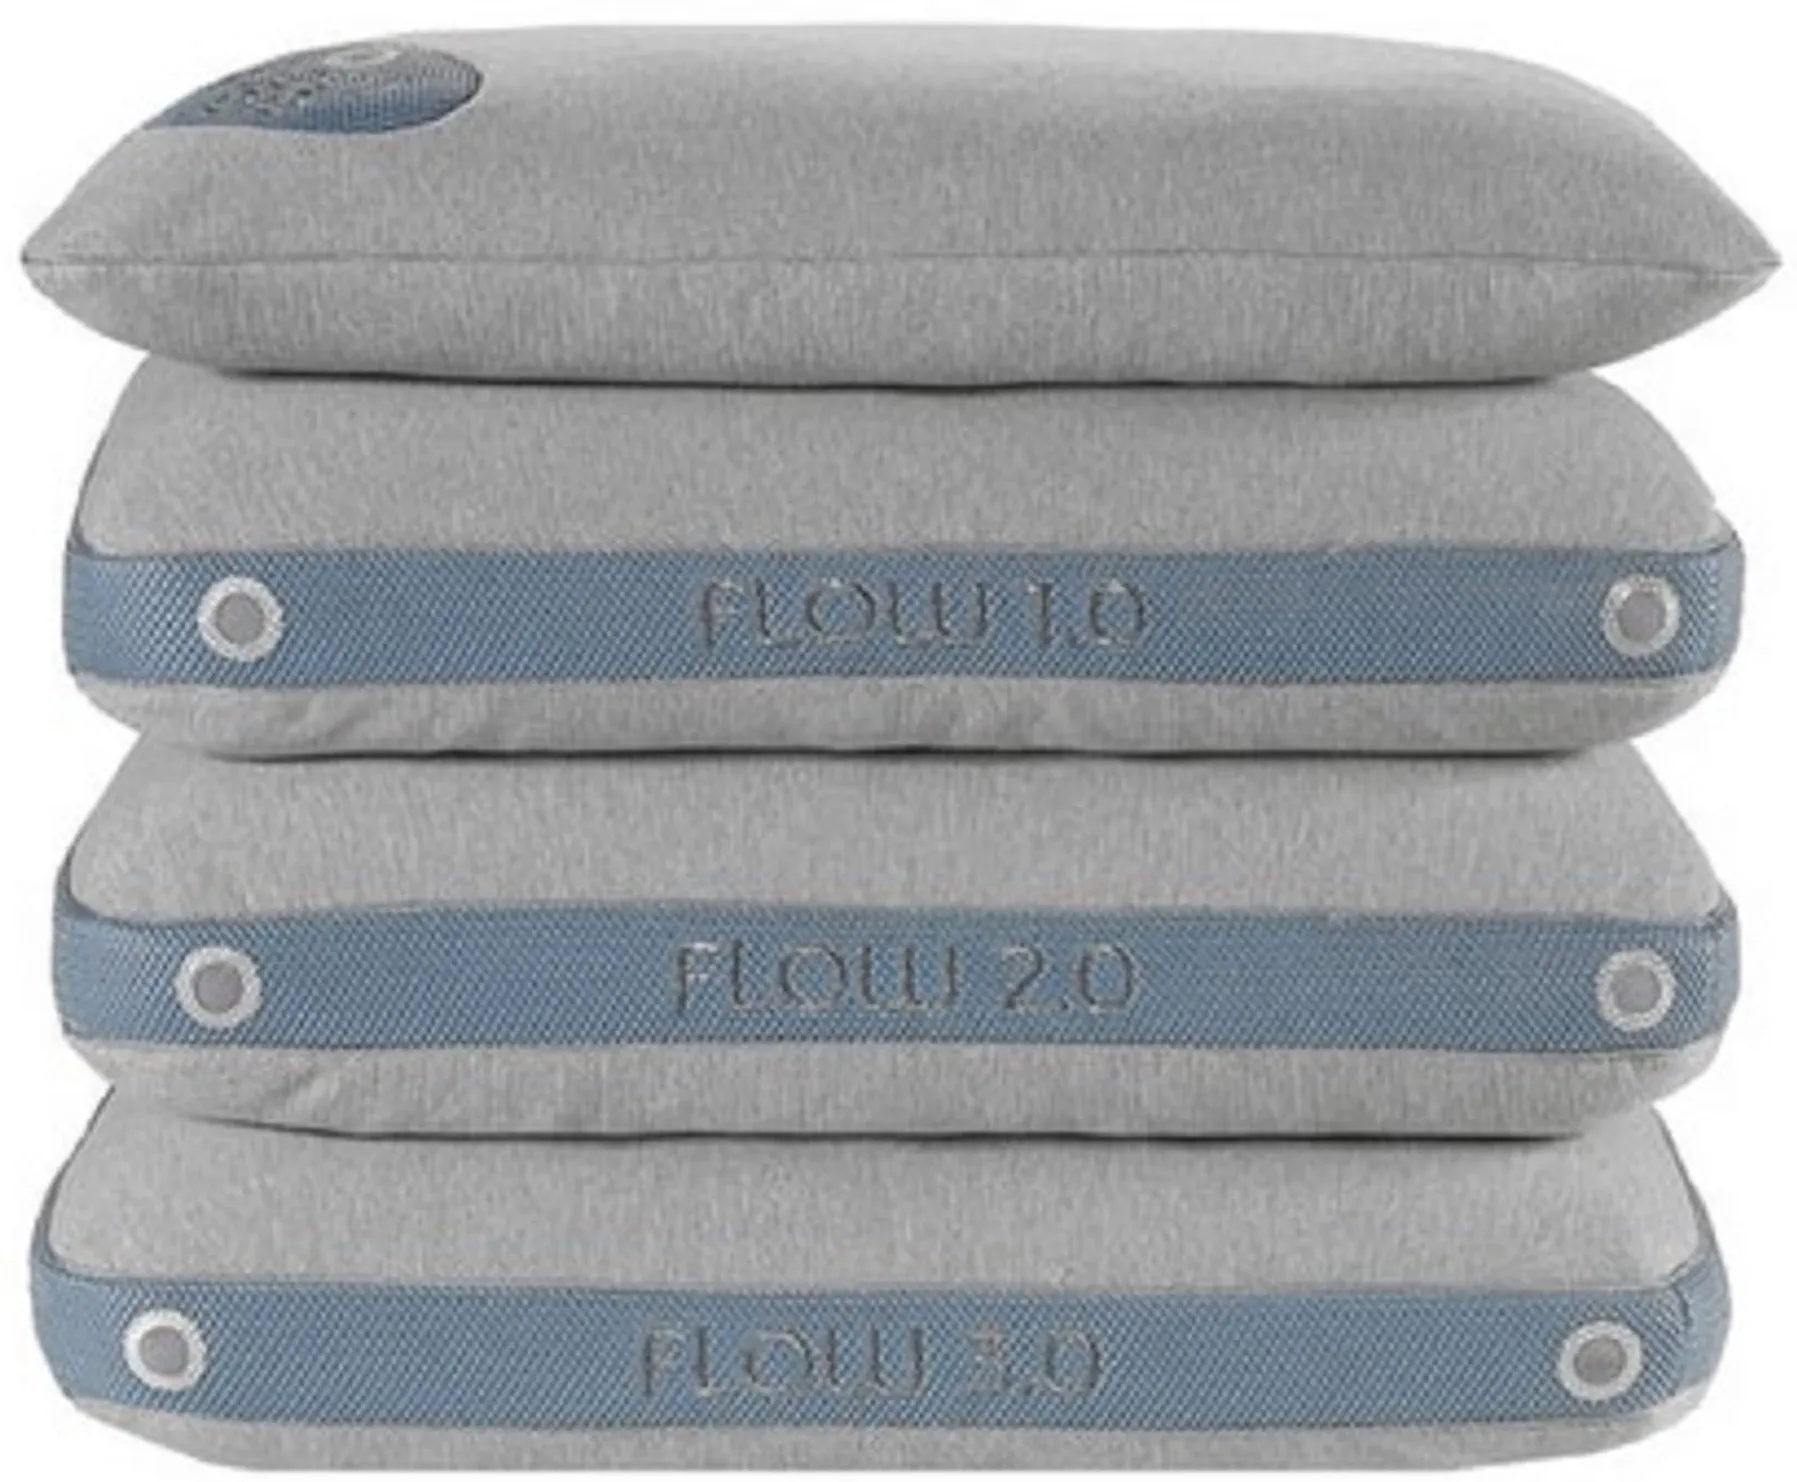 Bedgear Flow 1.0 Personal Pillow